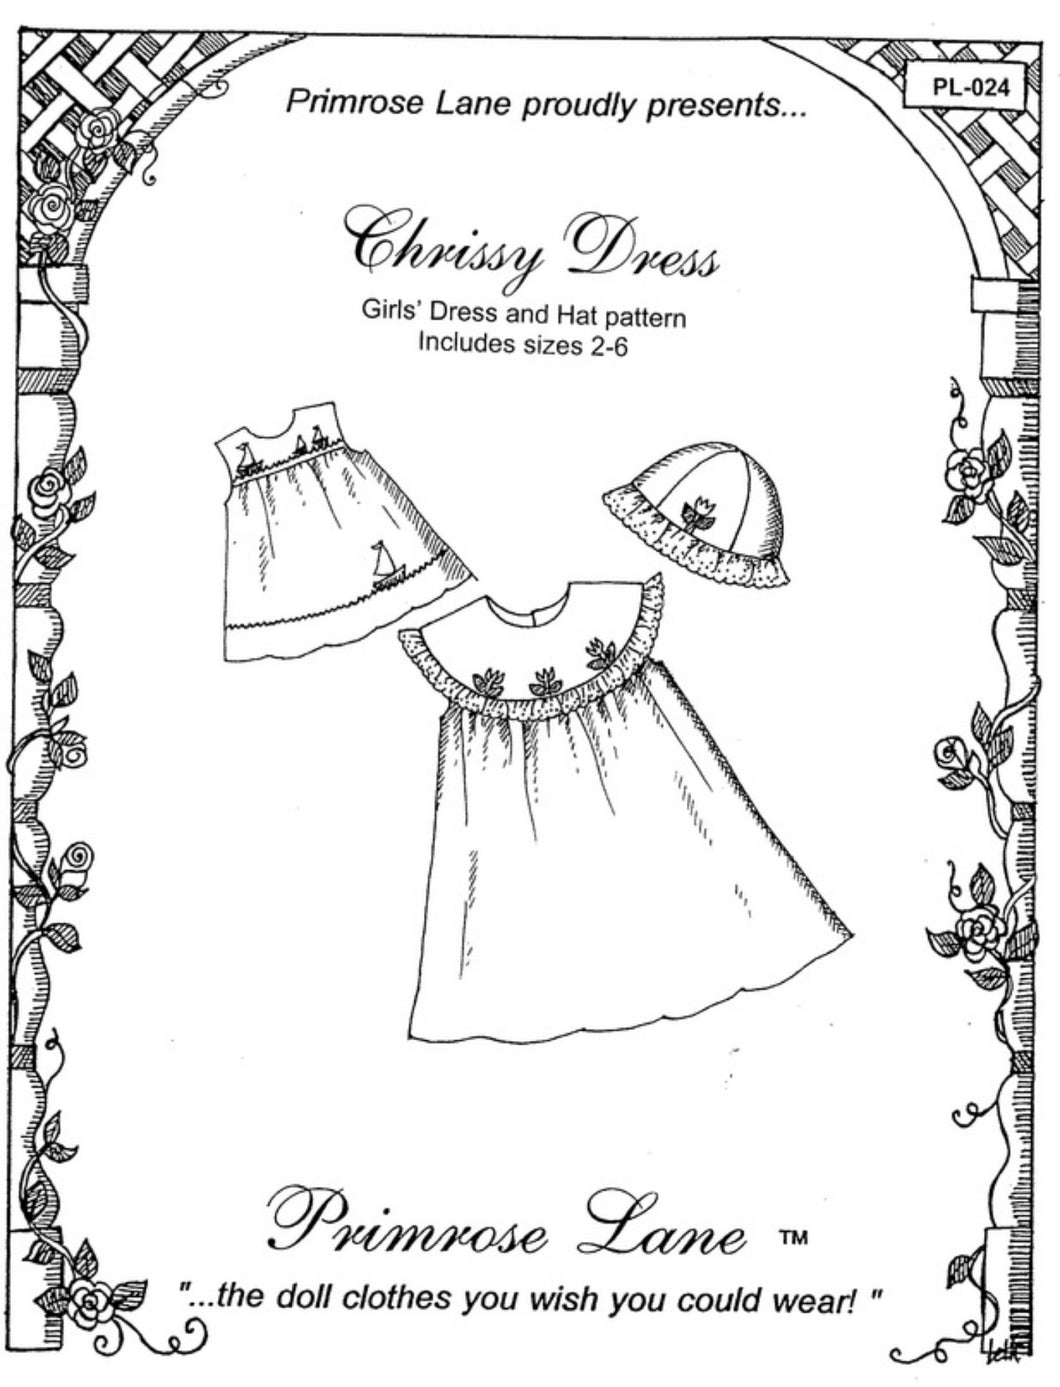 Primrose Lane Chrissy Dress